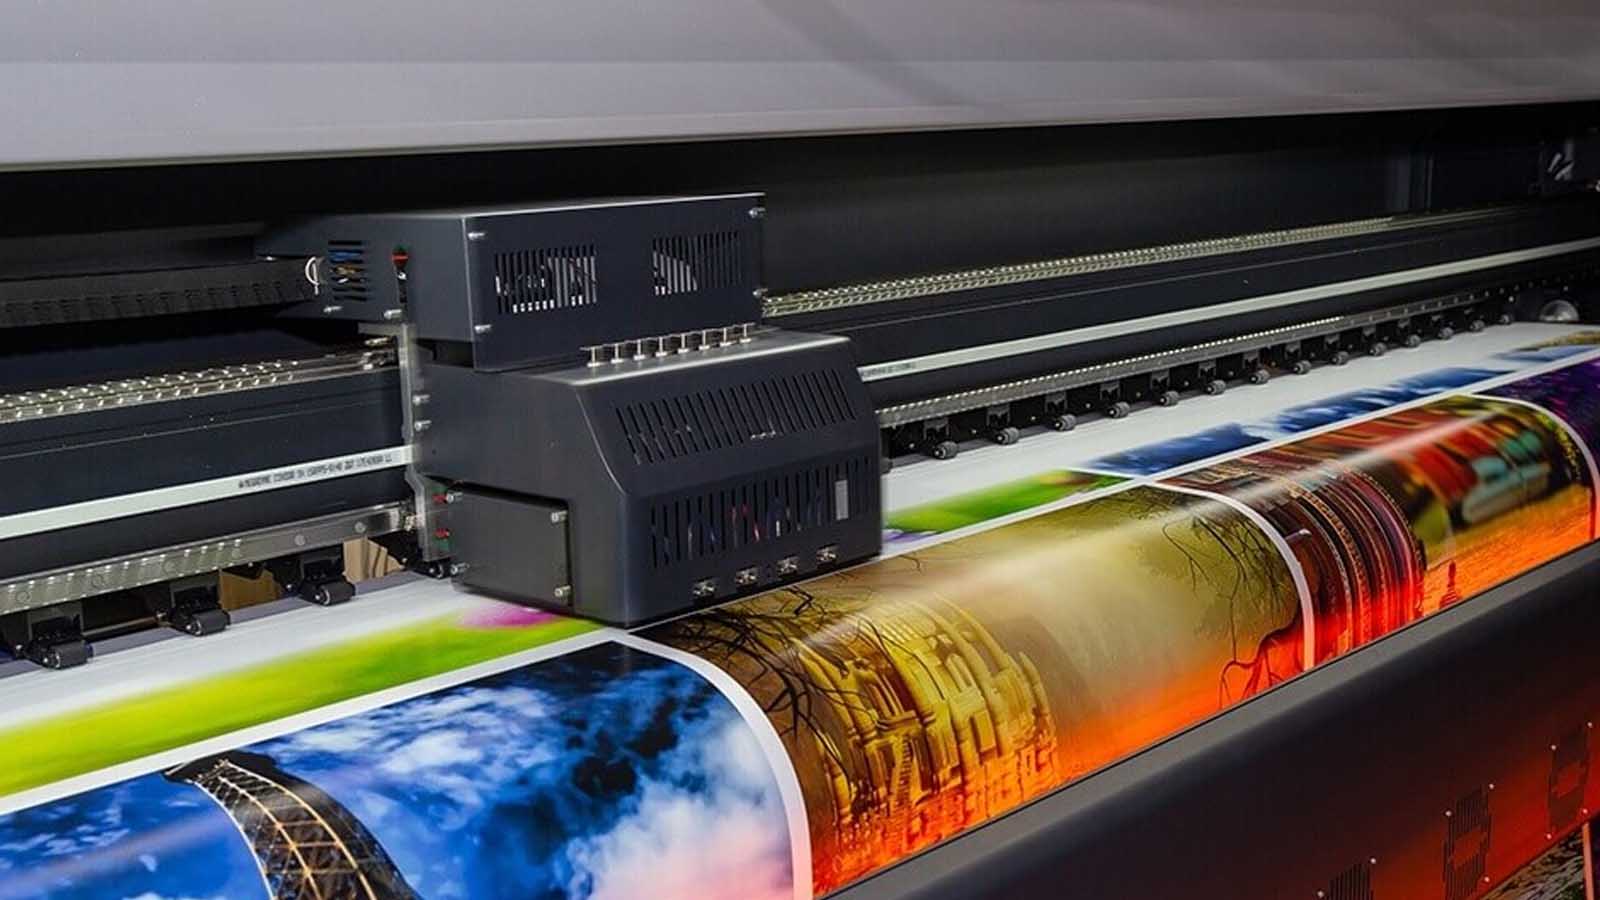 Kandy Offset Printers (Pvt) Ltd